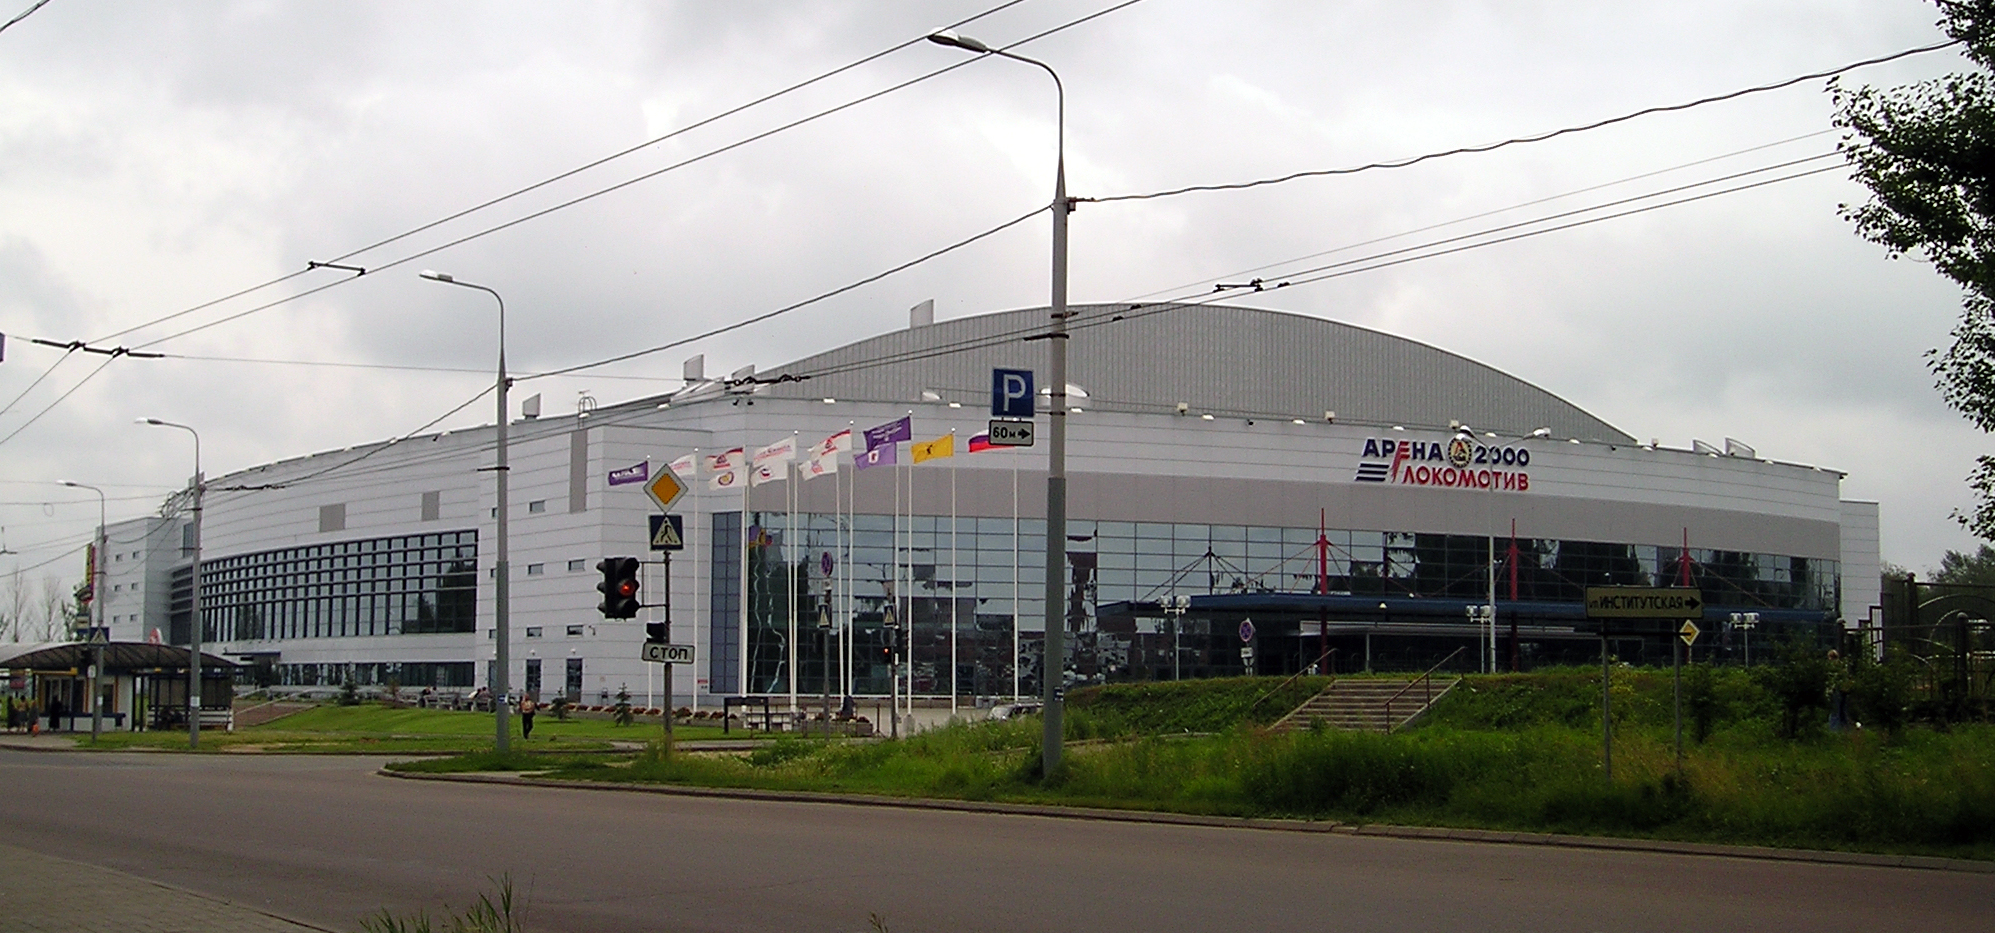 Arena 2000